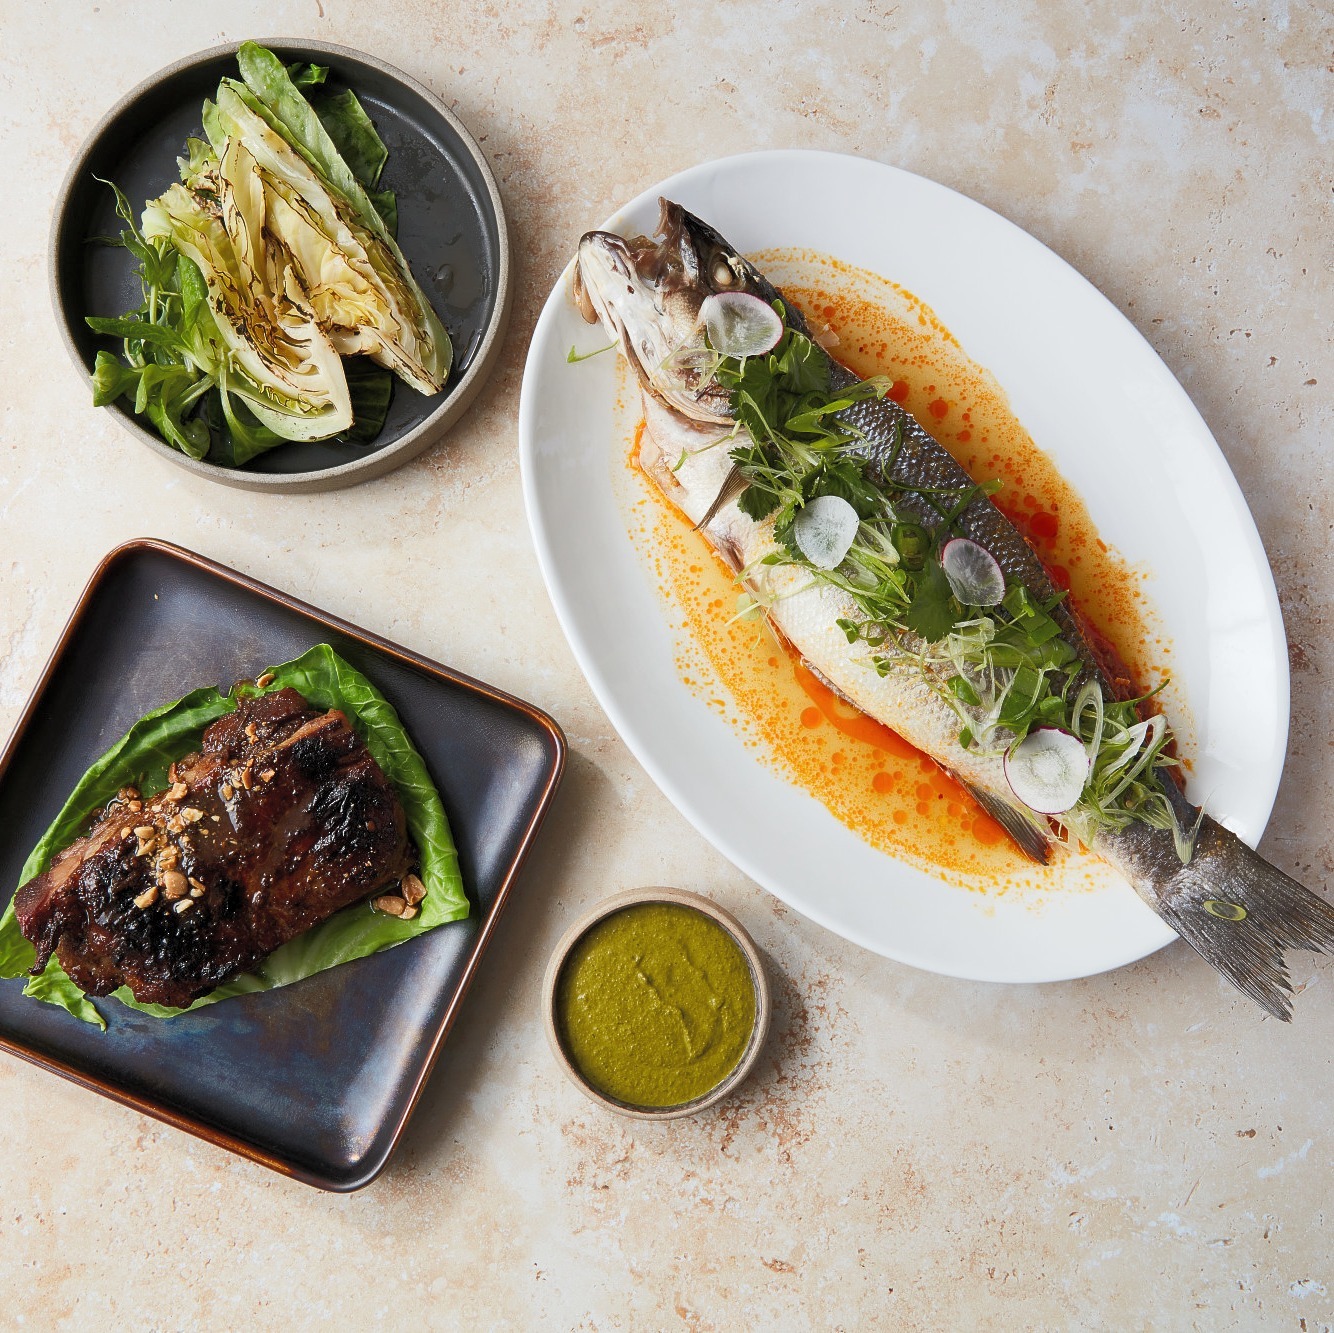 Lahpet restaurant is leading the way representing Burmese cuisine in London